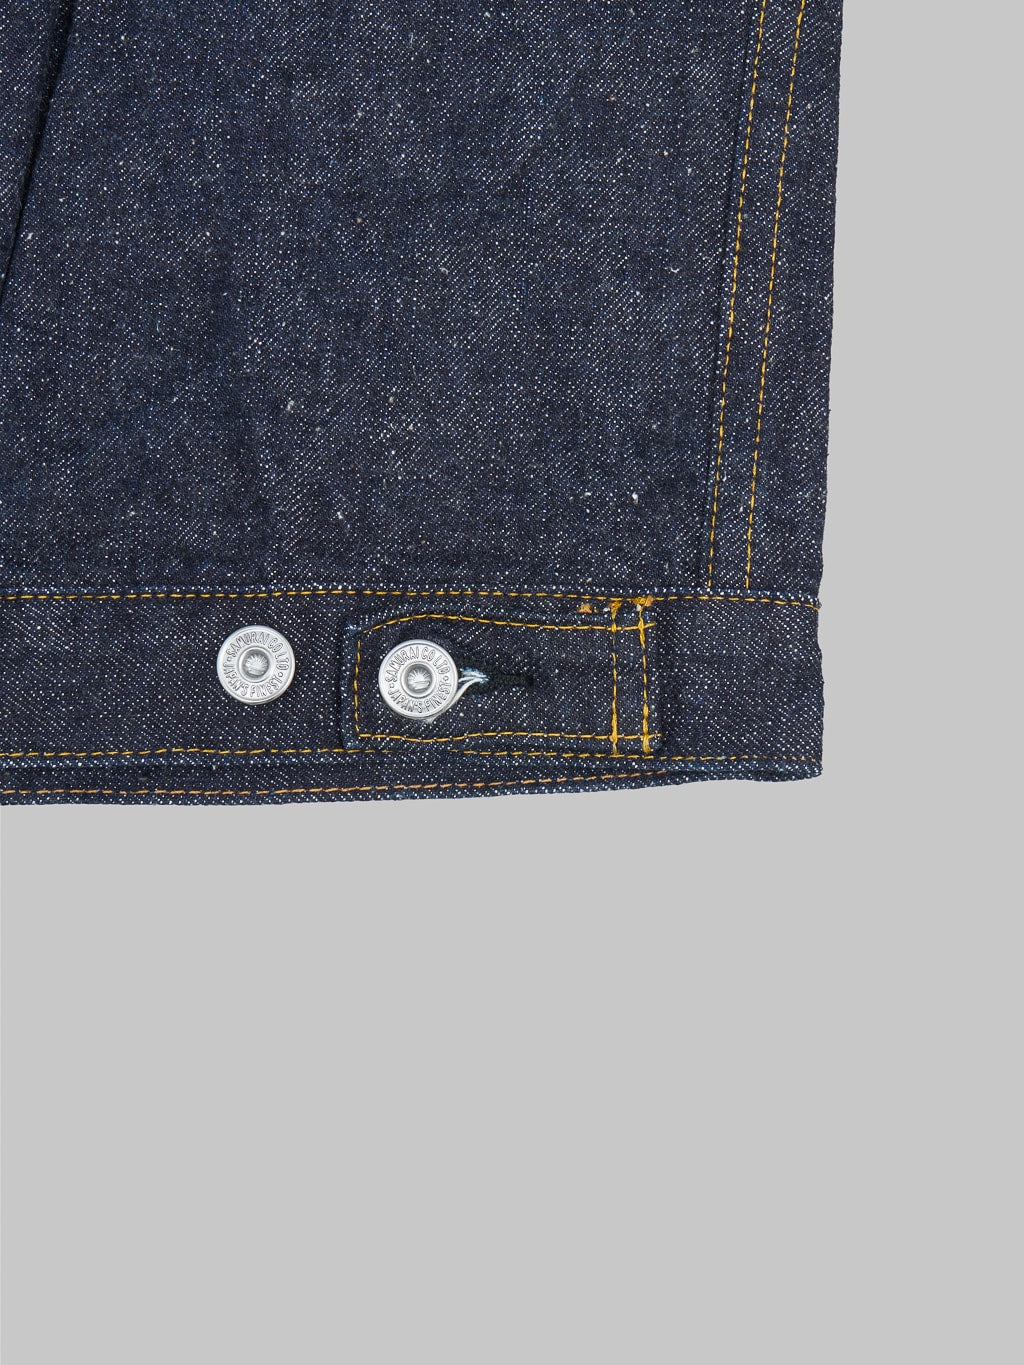 Samurai Jeans S5512PX 15oz Otokogi Denim Type 1 Jacket adjuster buttons